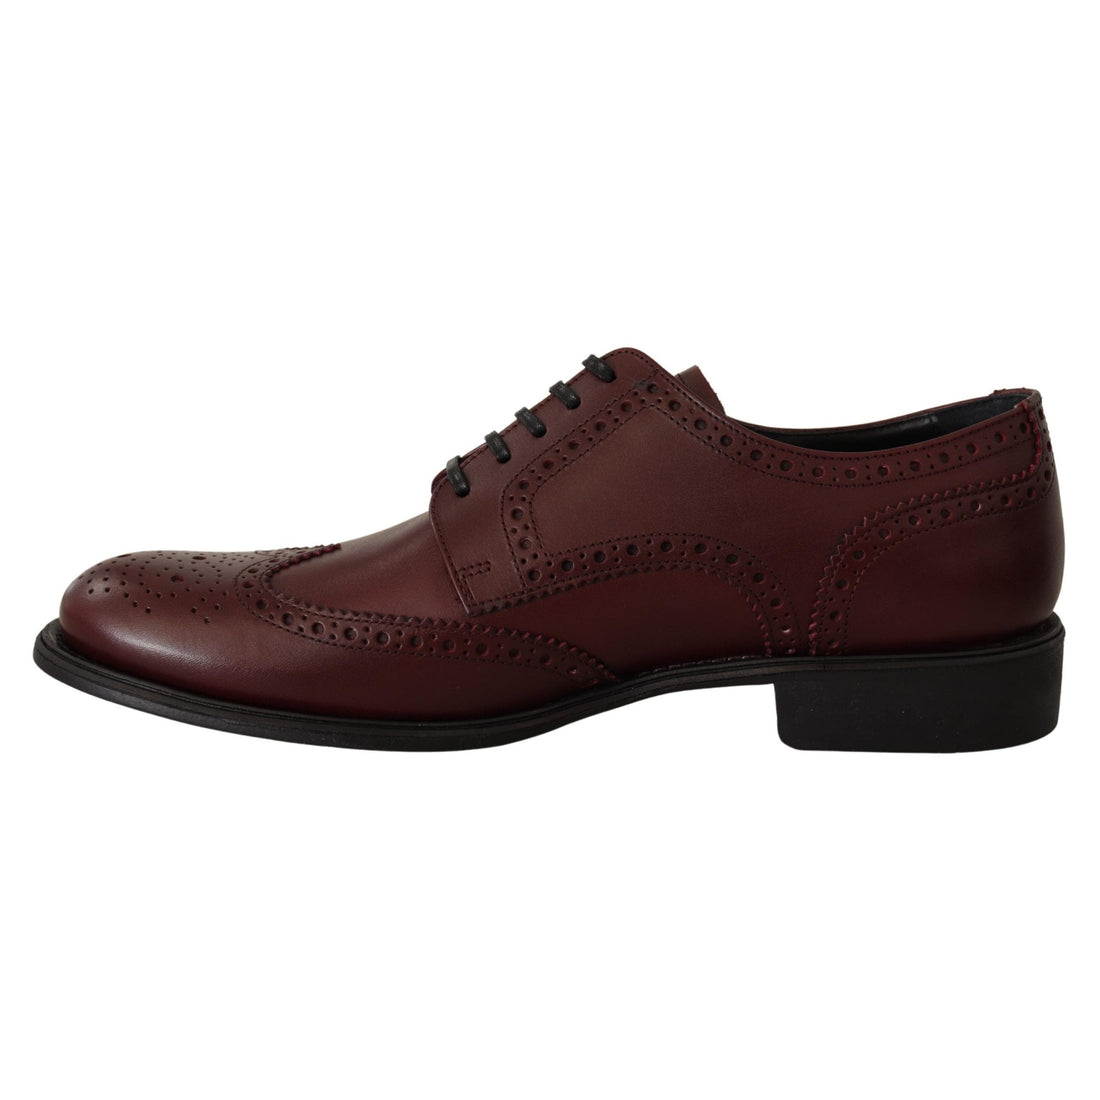 Dolce & Gabbana Bordeaux Leather Oxford Wingtip Formal Shoes